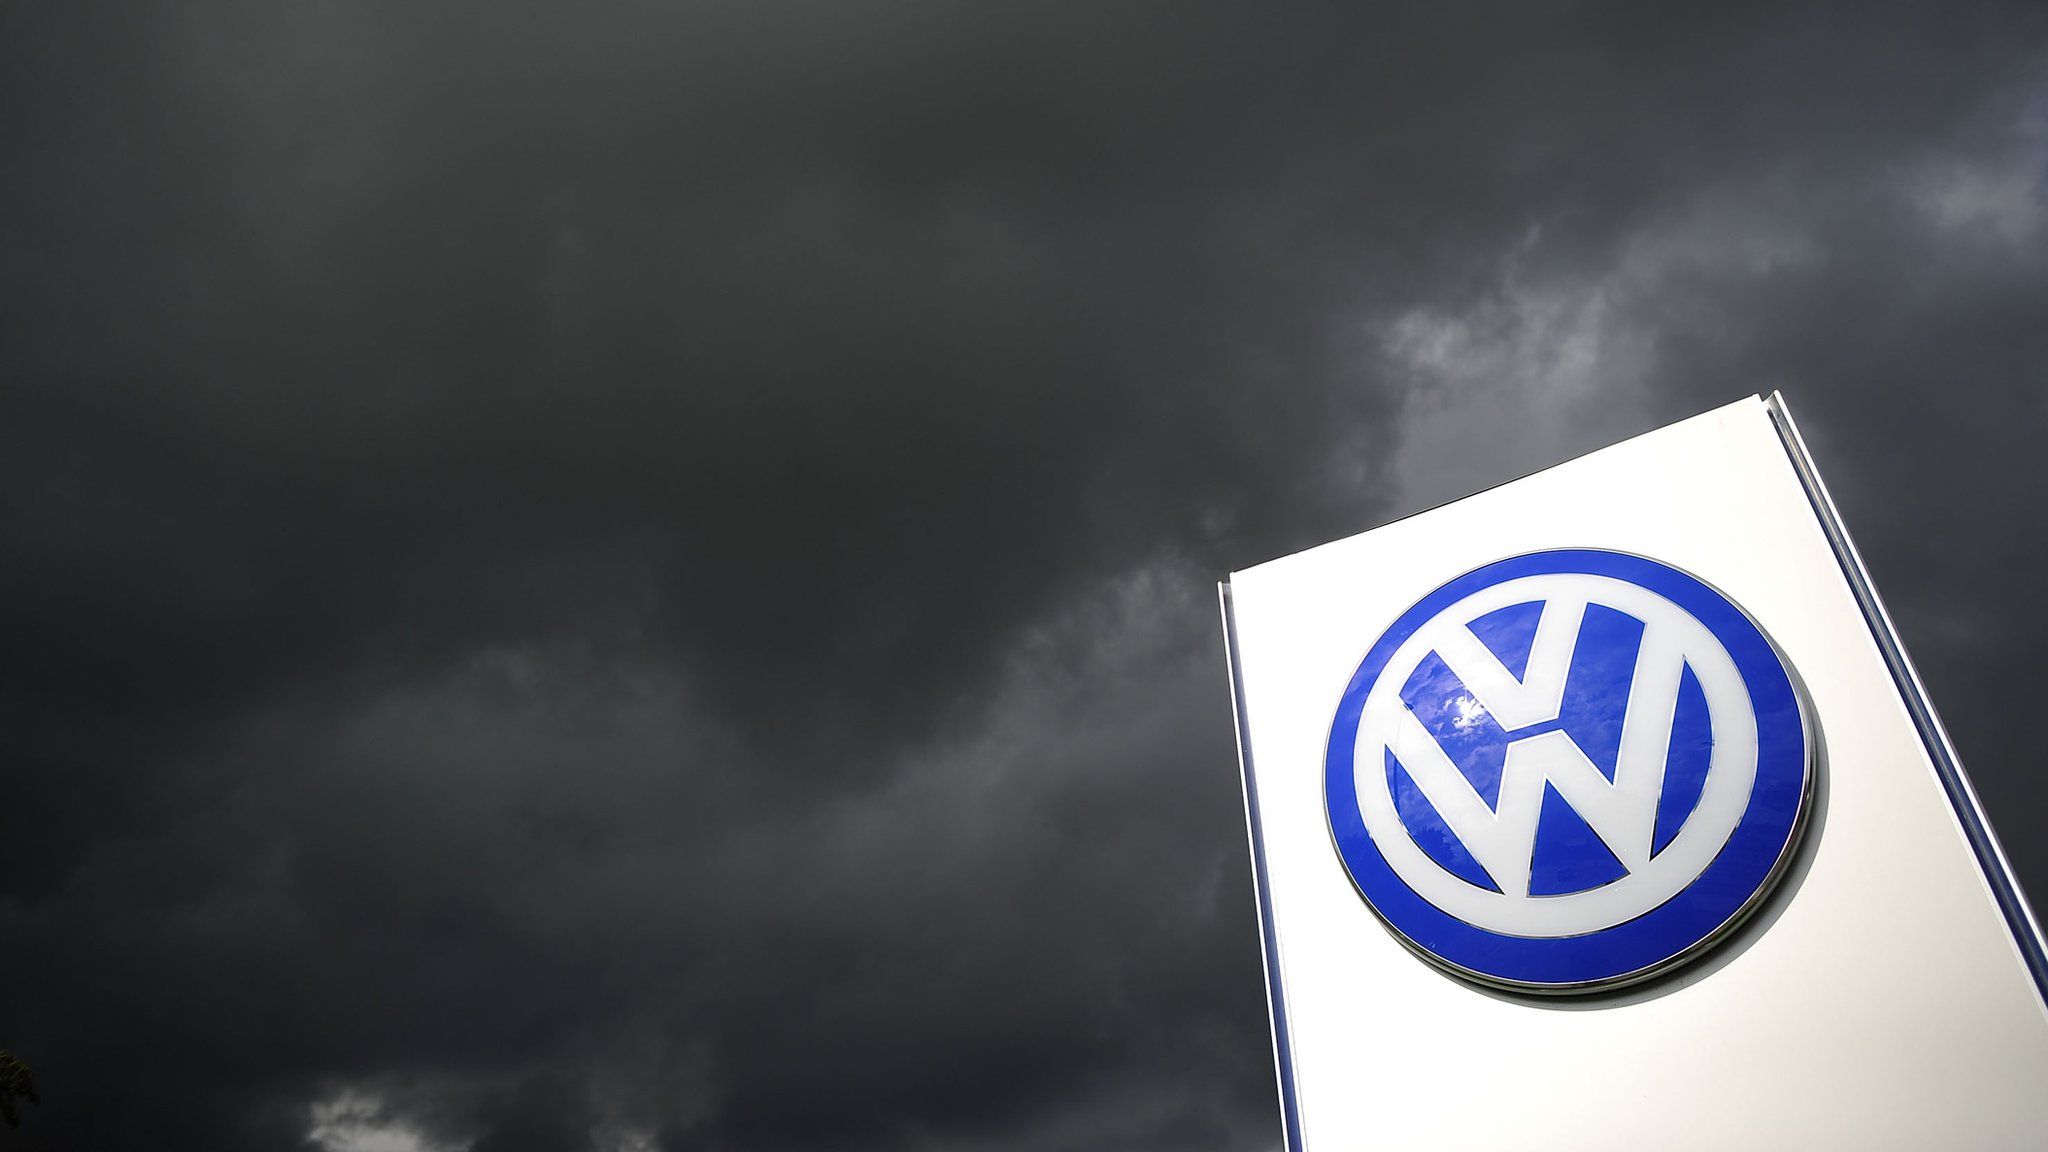 VW sign